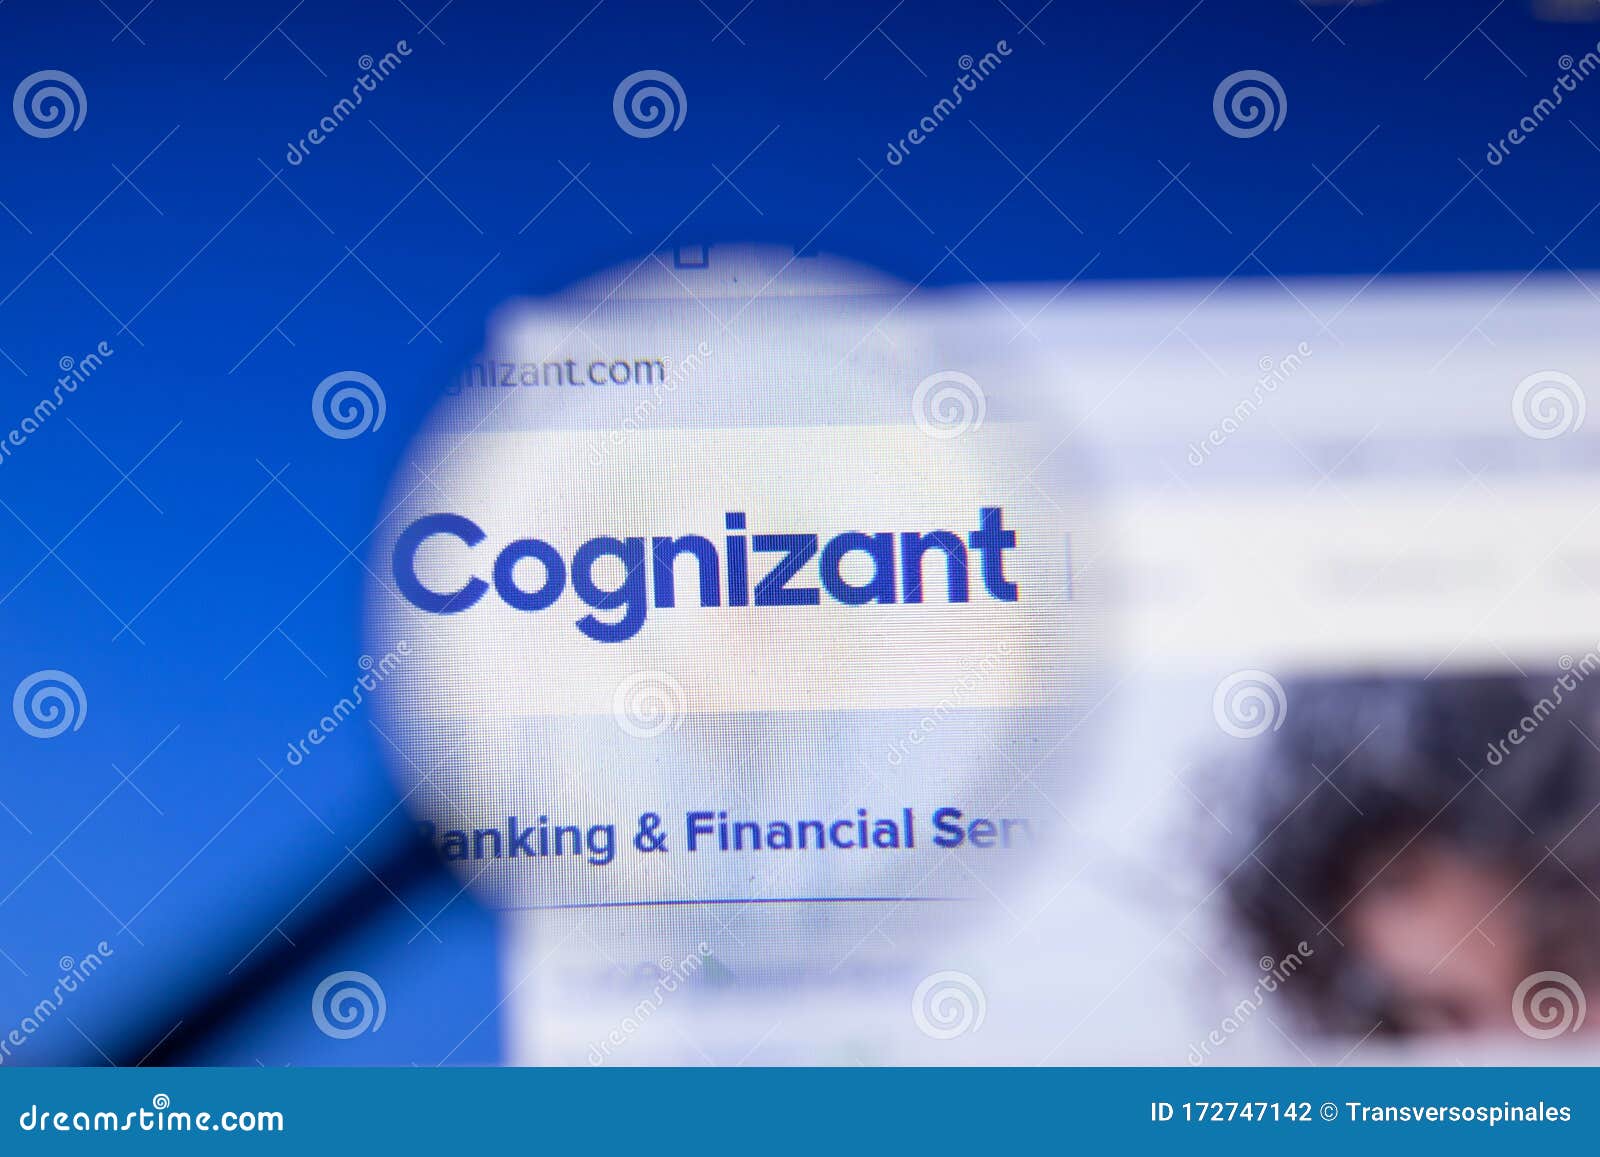 Cognizant company website acr select change healthcare